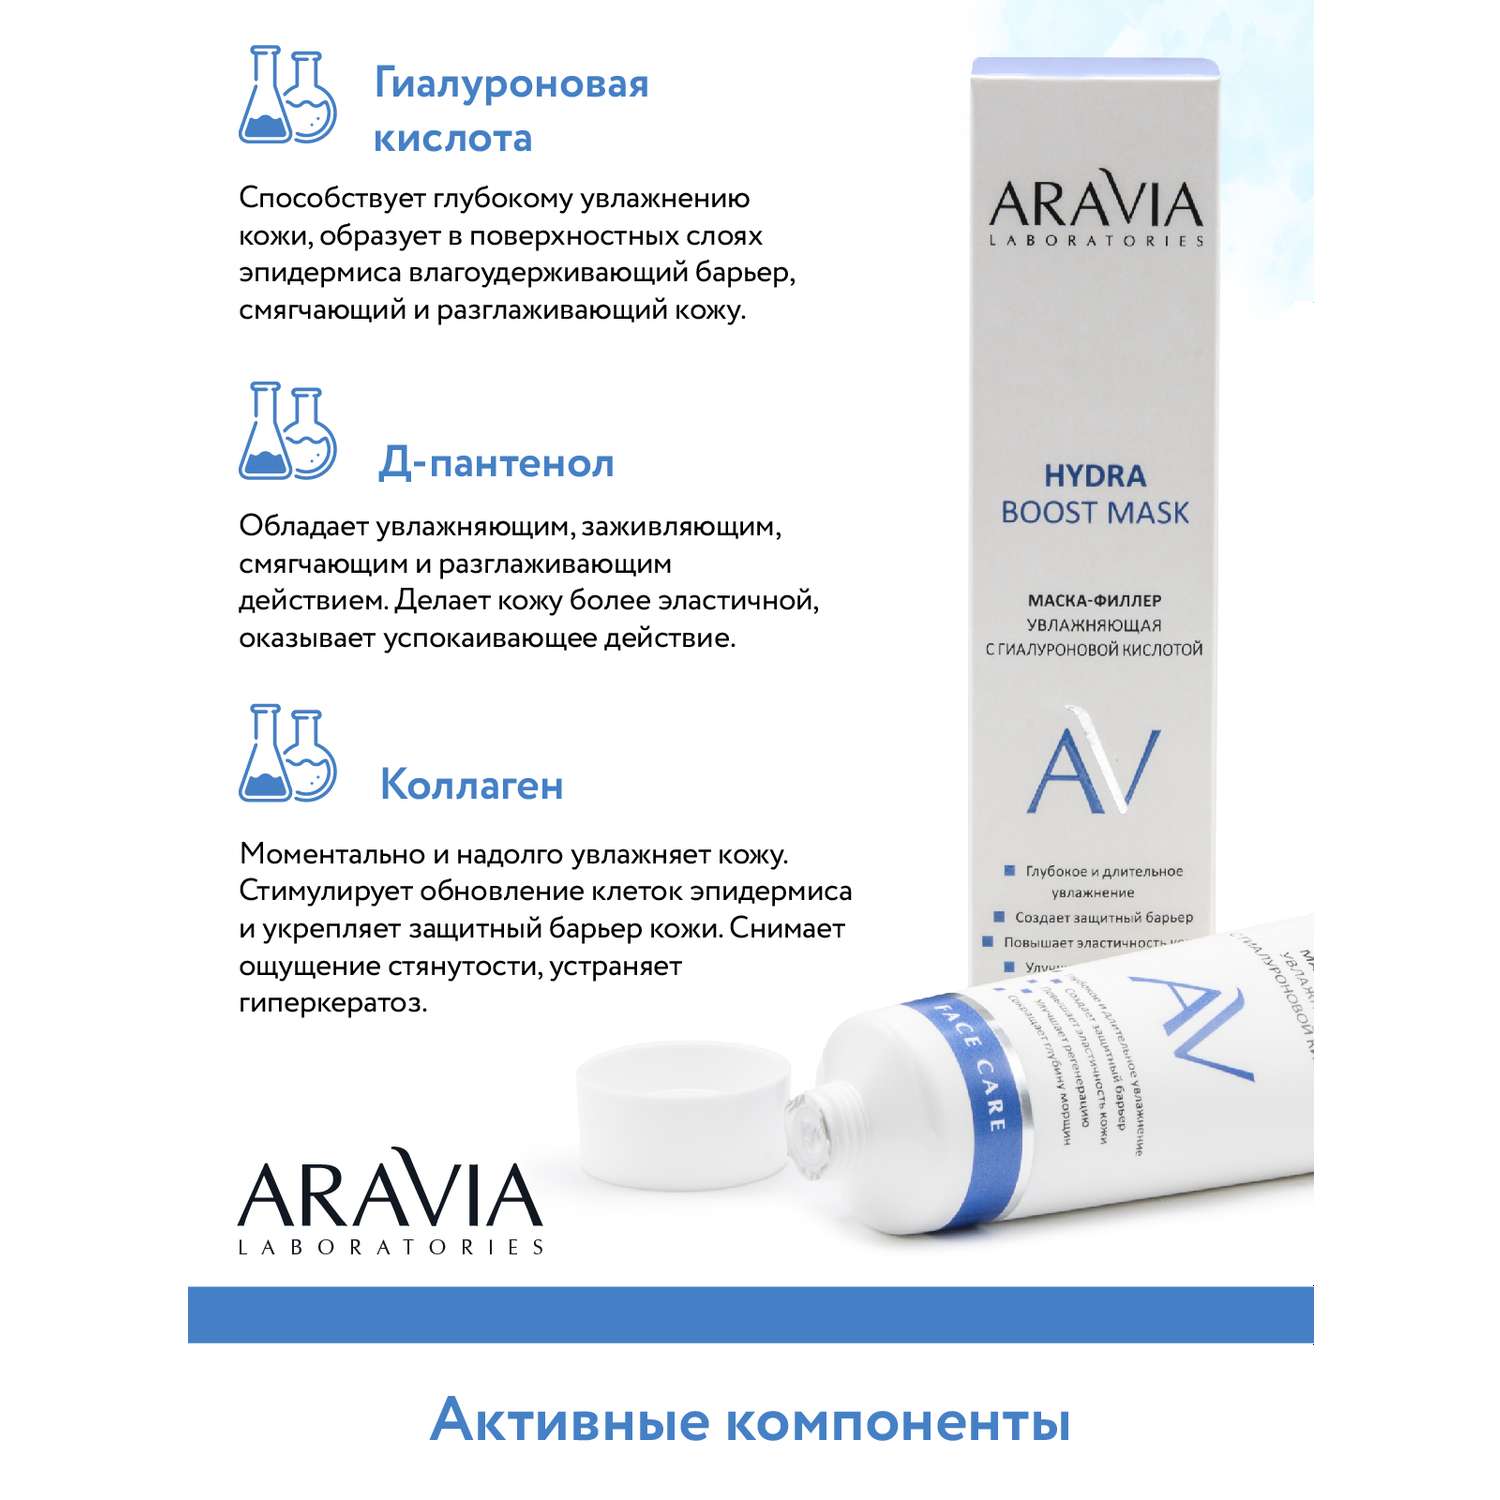 Маска-филлер для лица ARAVIA Laboratories с гиалуроновой кислотой Hydra Boost Mask 100 мл - фото 9